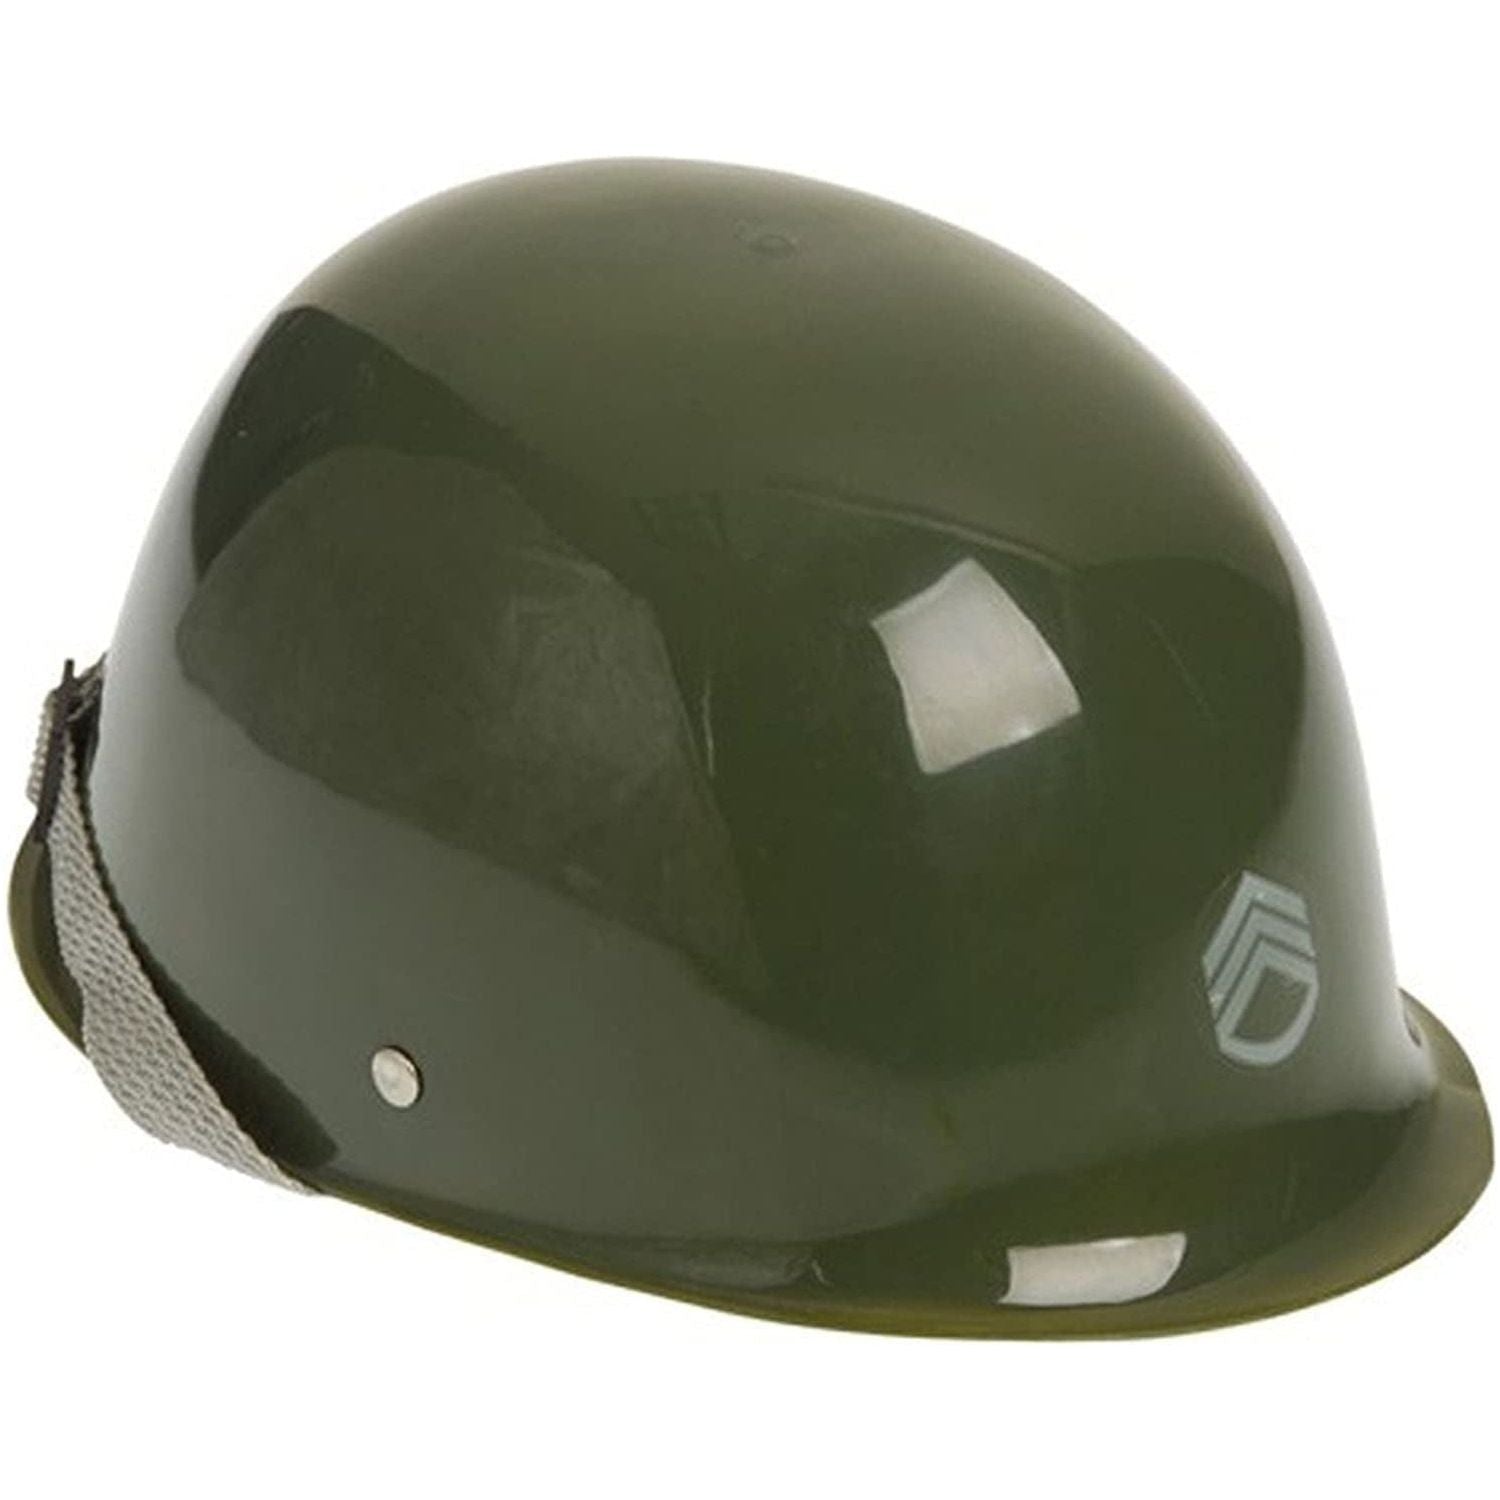 One Child Army Helmet